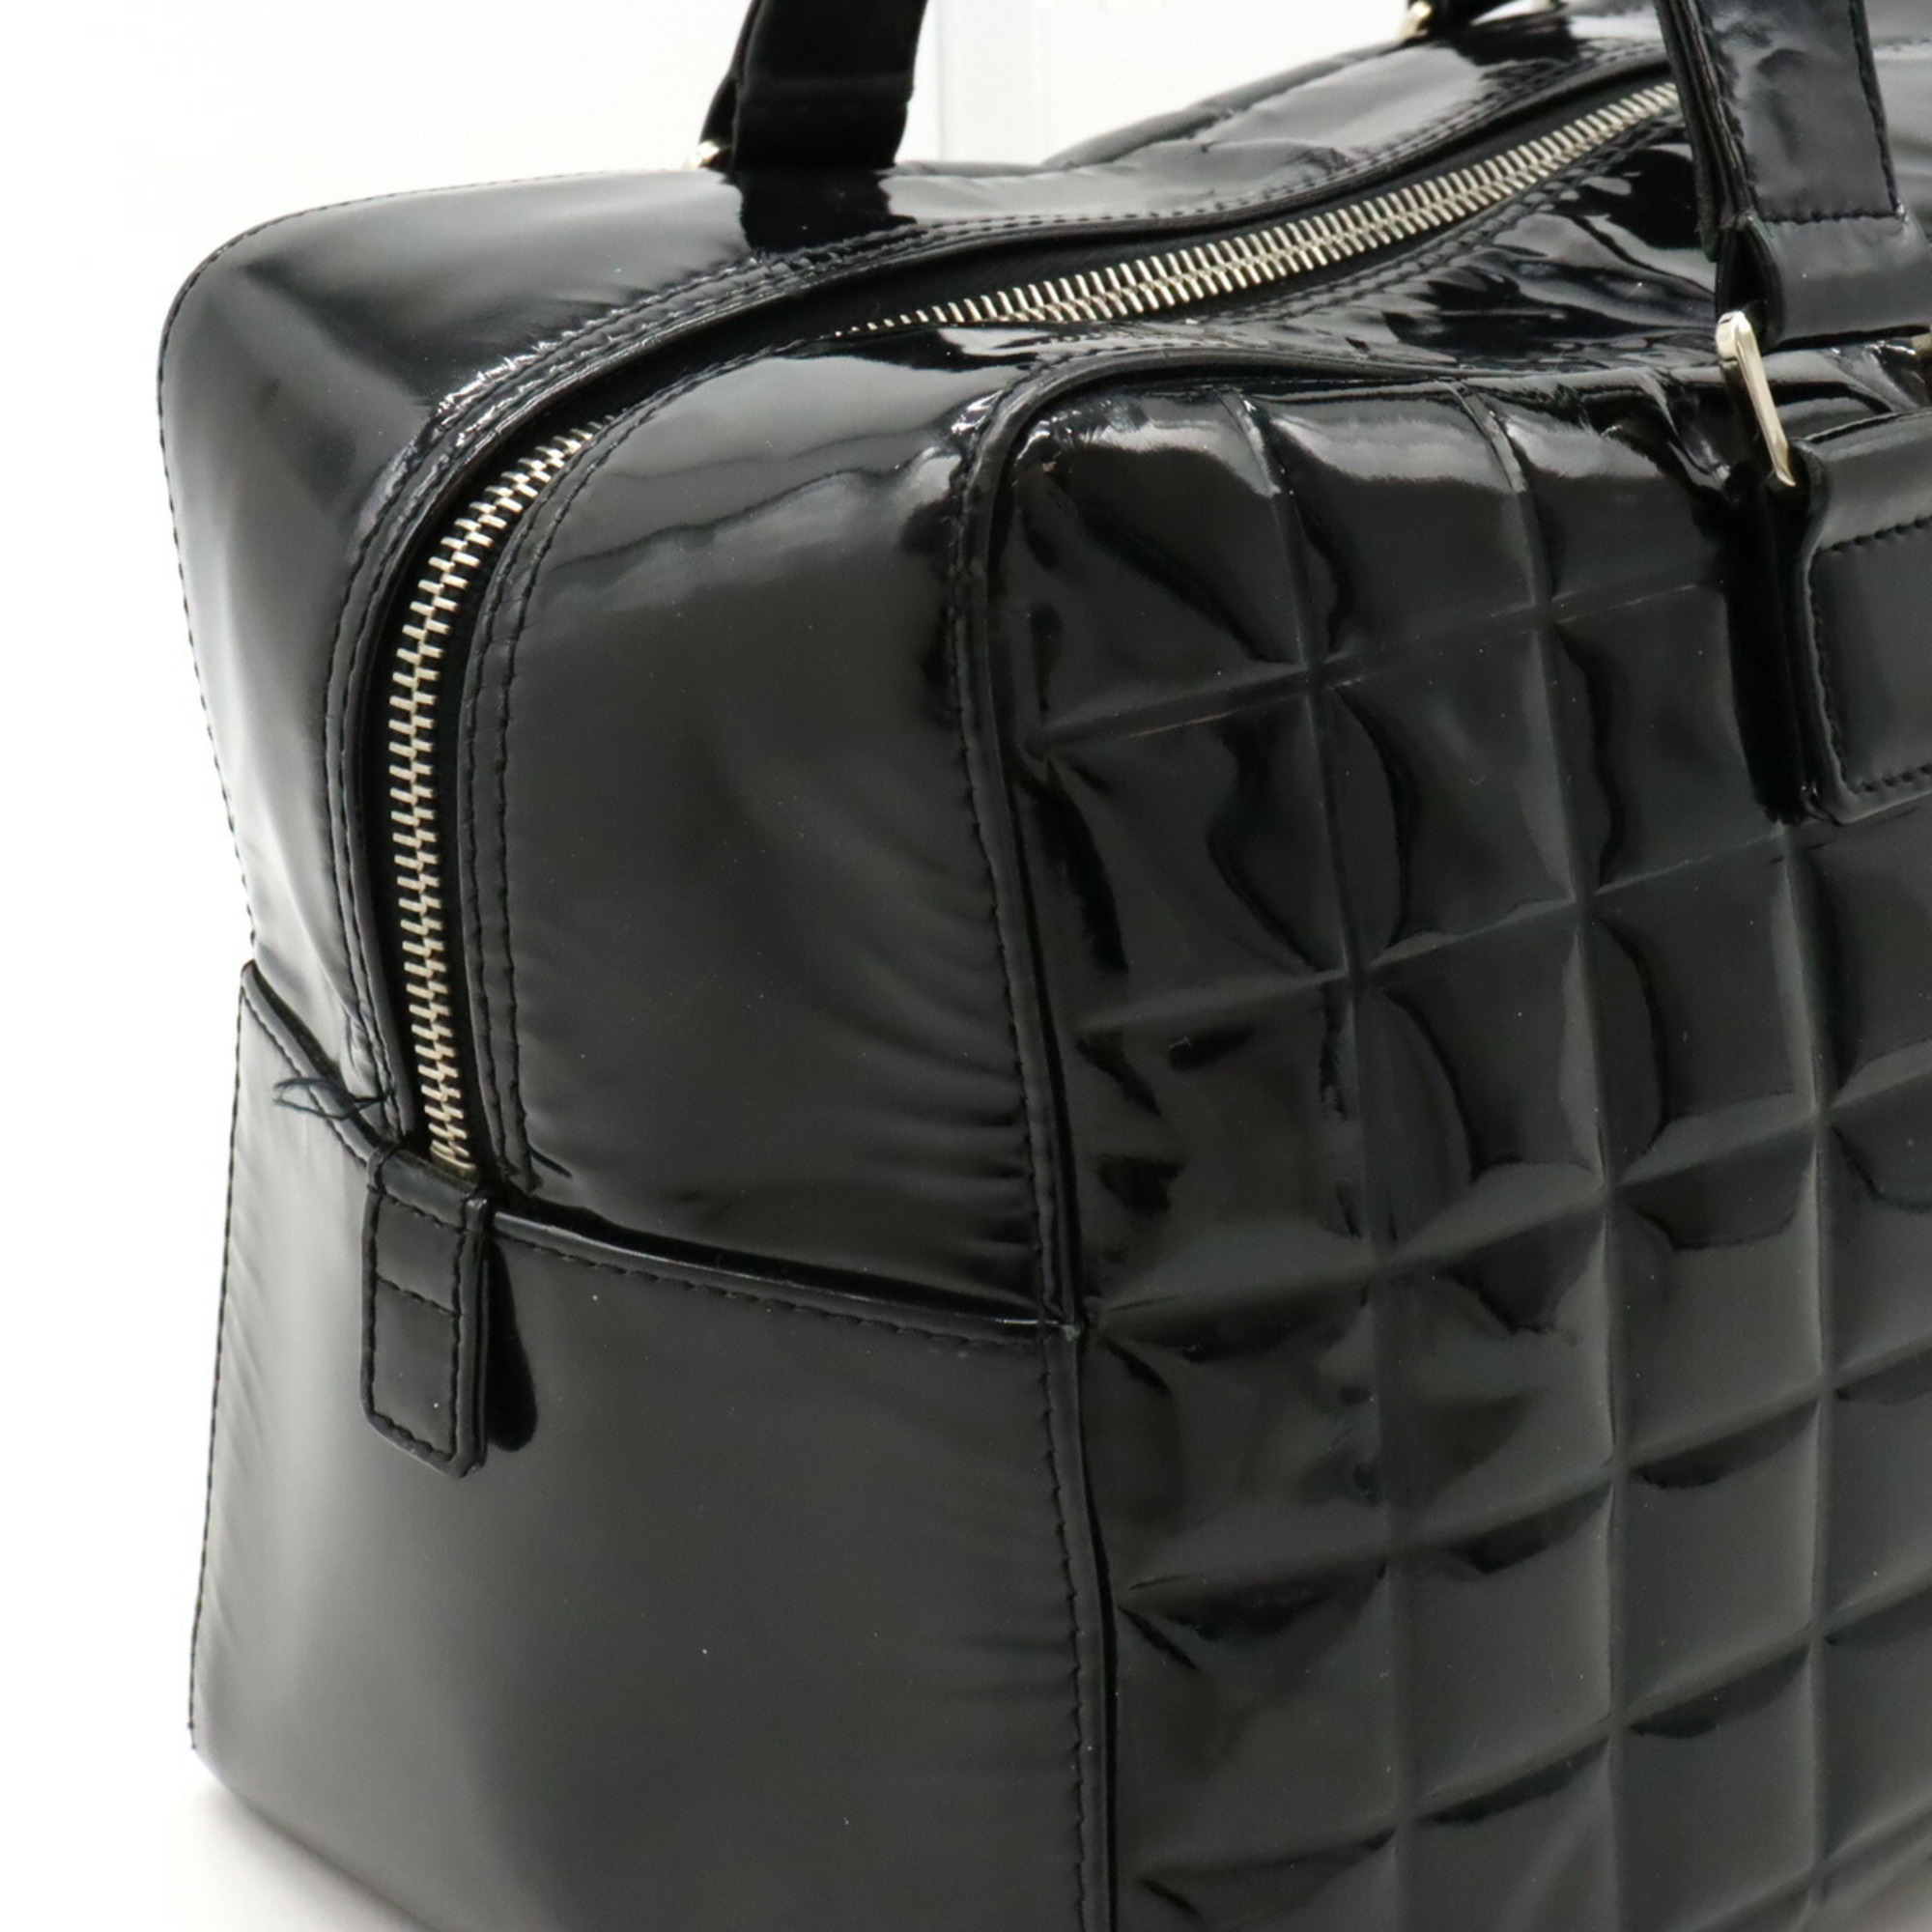 CHANEL Chocolate Bar Coco Mark Handbag Boston Bag Patent Leather Black A19271